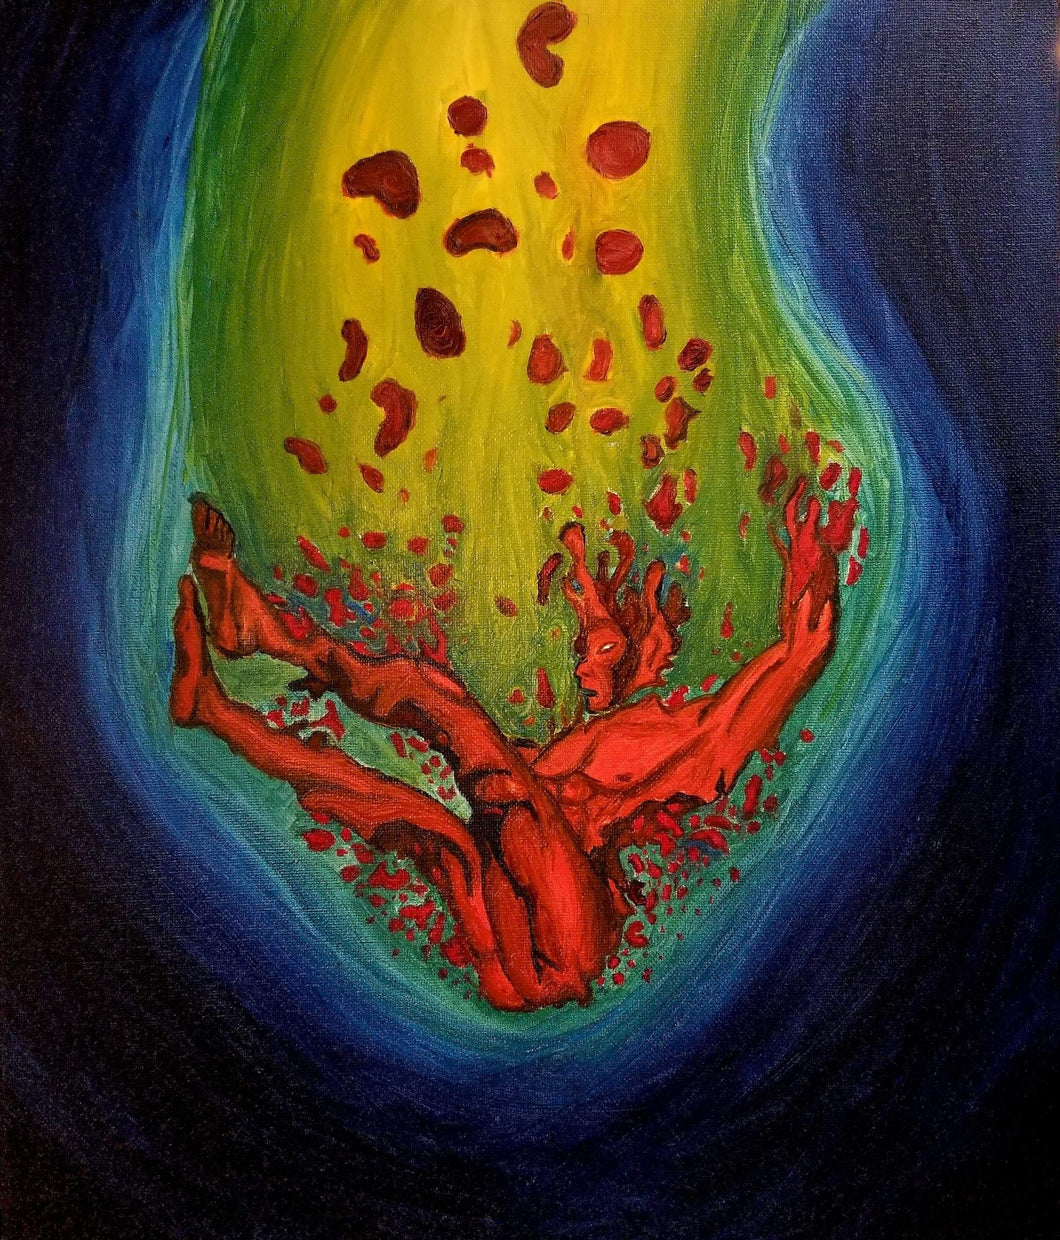 The Melting Man art by Anthony Ferrara